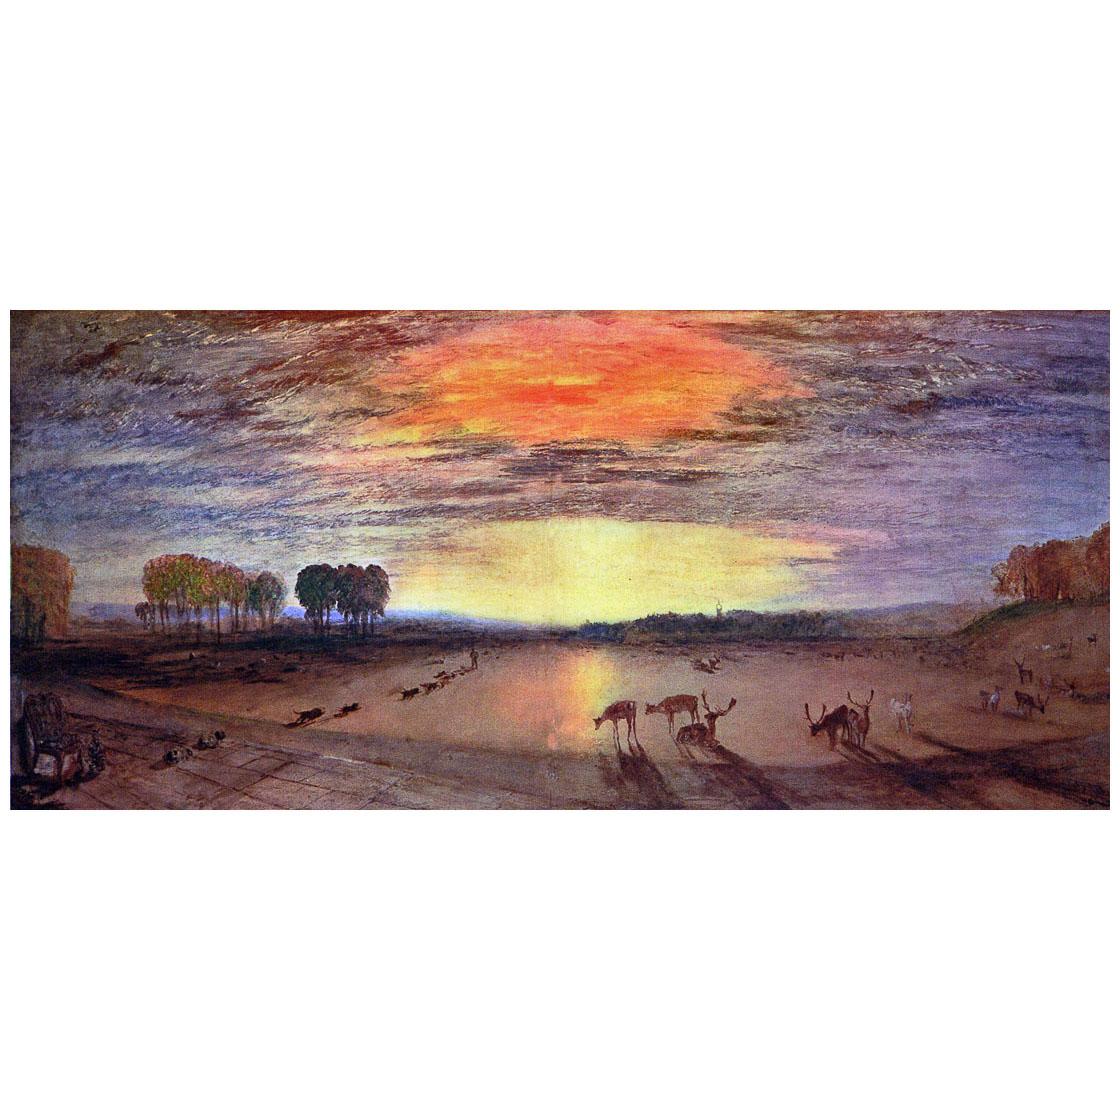 William Turner. Sunset in the Petworth Park. 1830. Tate Britain